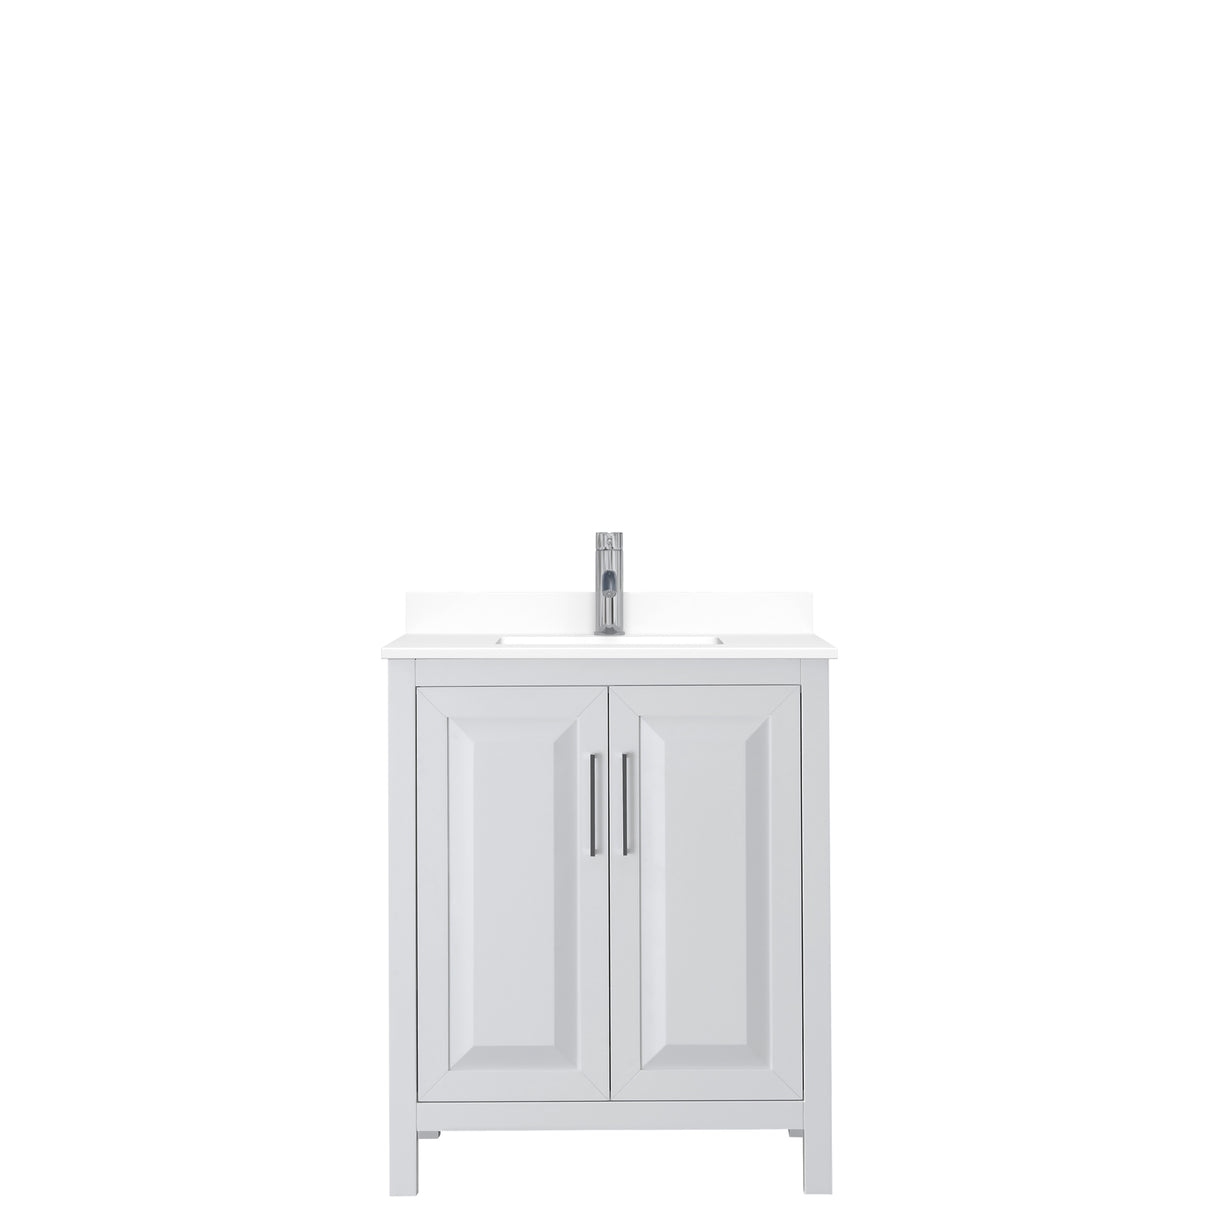 Daria 30 Inch Single Bathroom Vanity in White White Cultured Marble Countertop Undermount Square Sink No Mirror